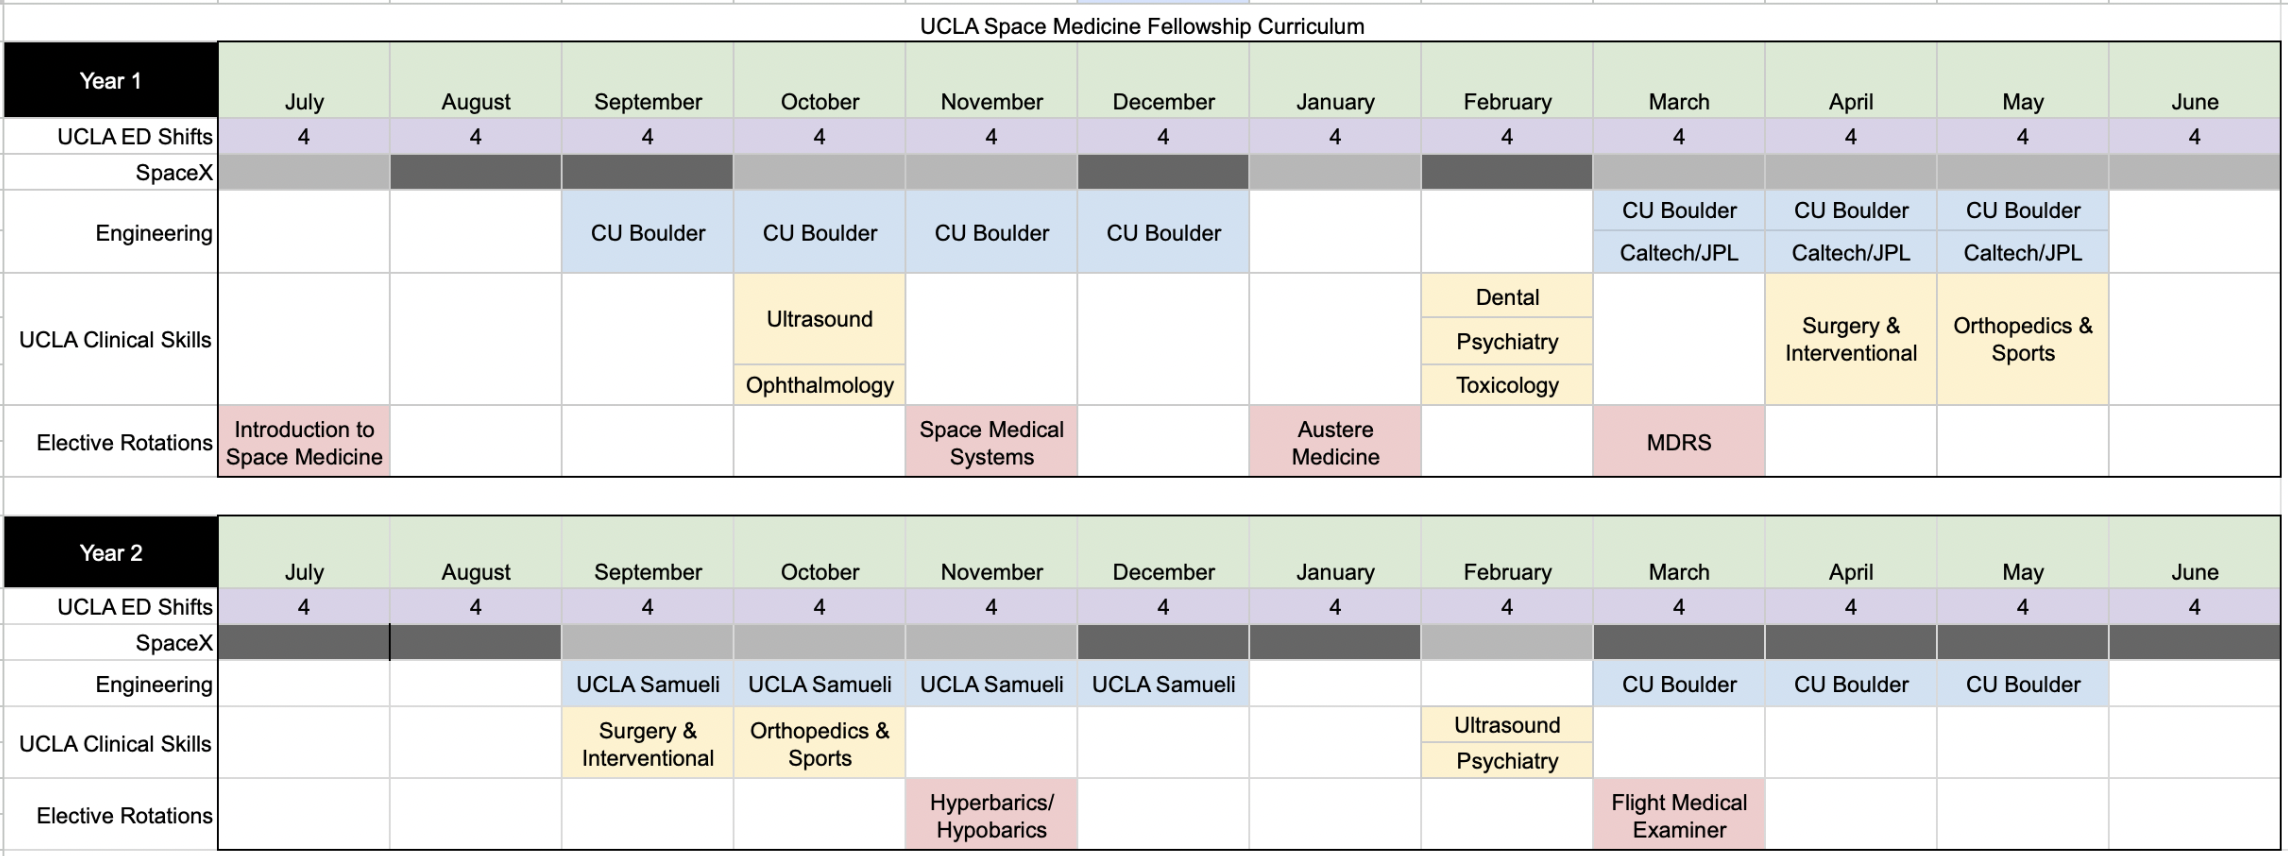 UCLA Space Medicine Fellowship Curriculum